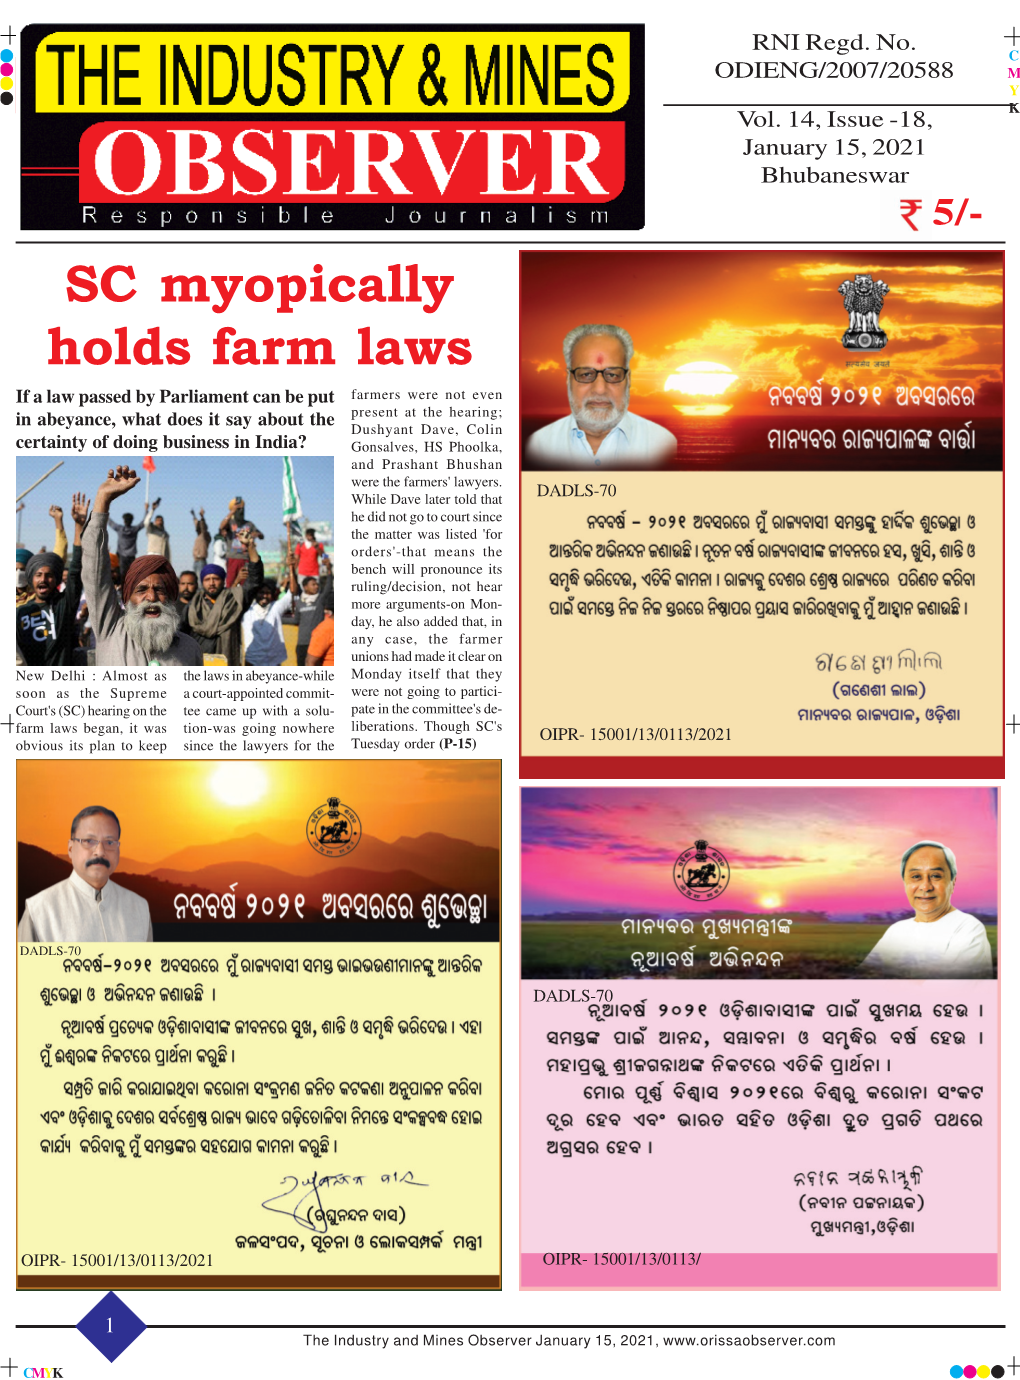 SC Myopically Holds Farm Laws